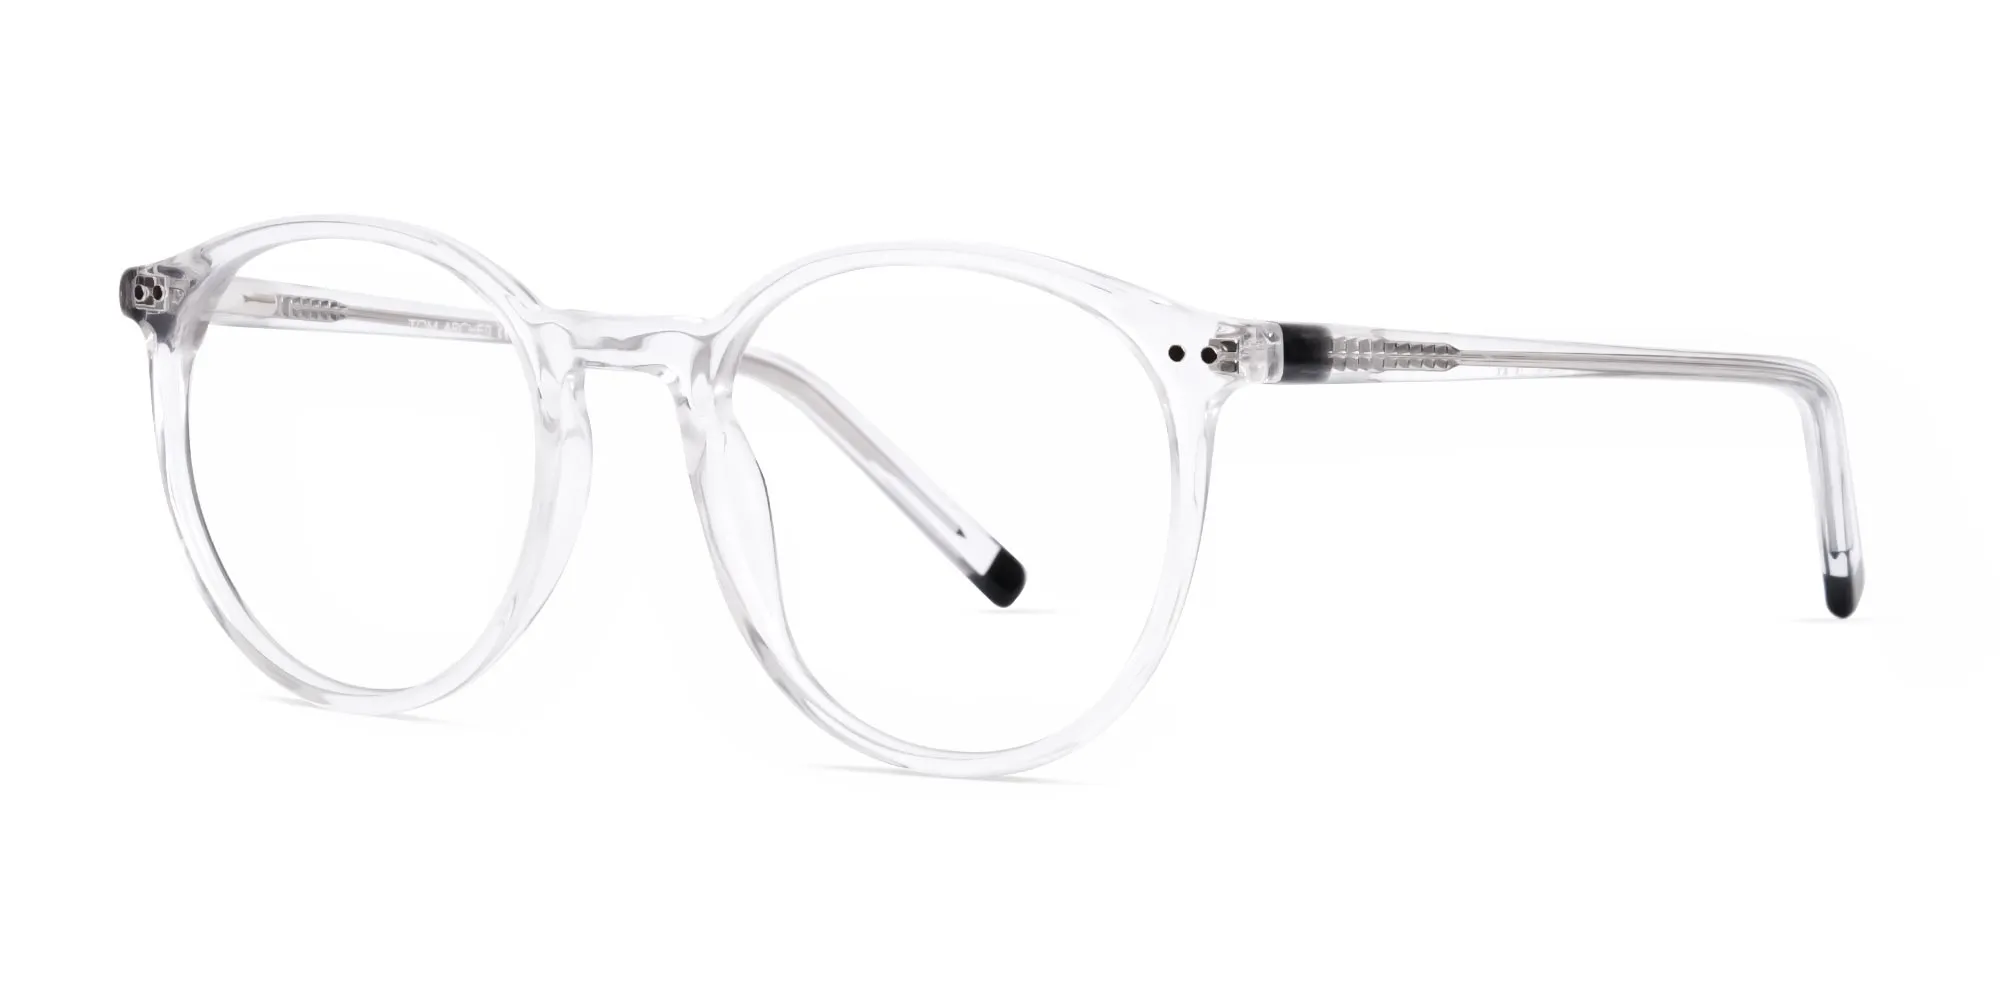 transparent and black round glasses frames